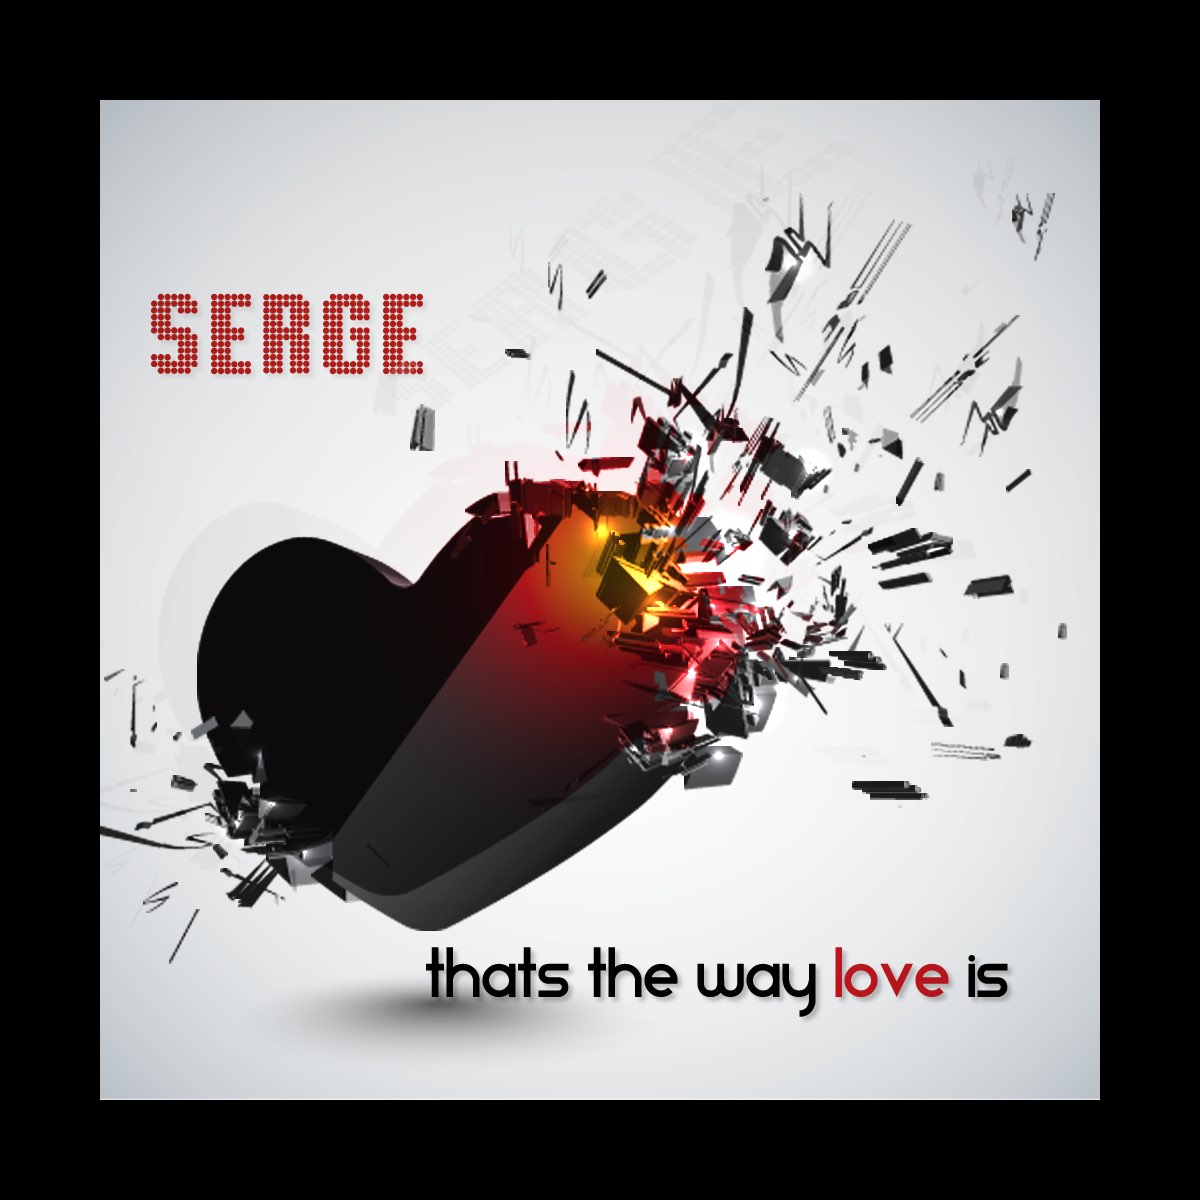 Love way show. Serge песня. Музыка Серж. A way to Love. Thats the Music.